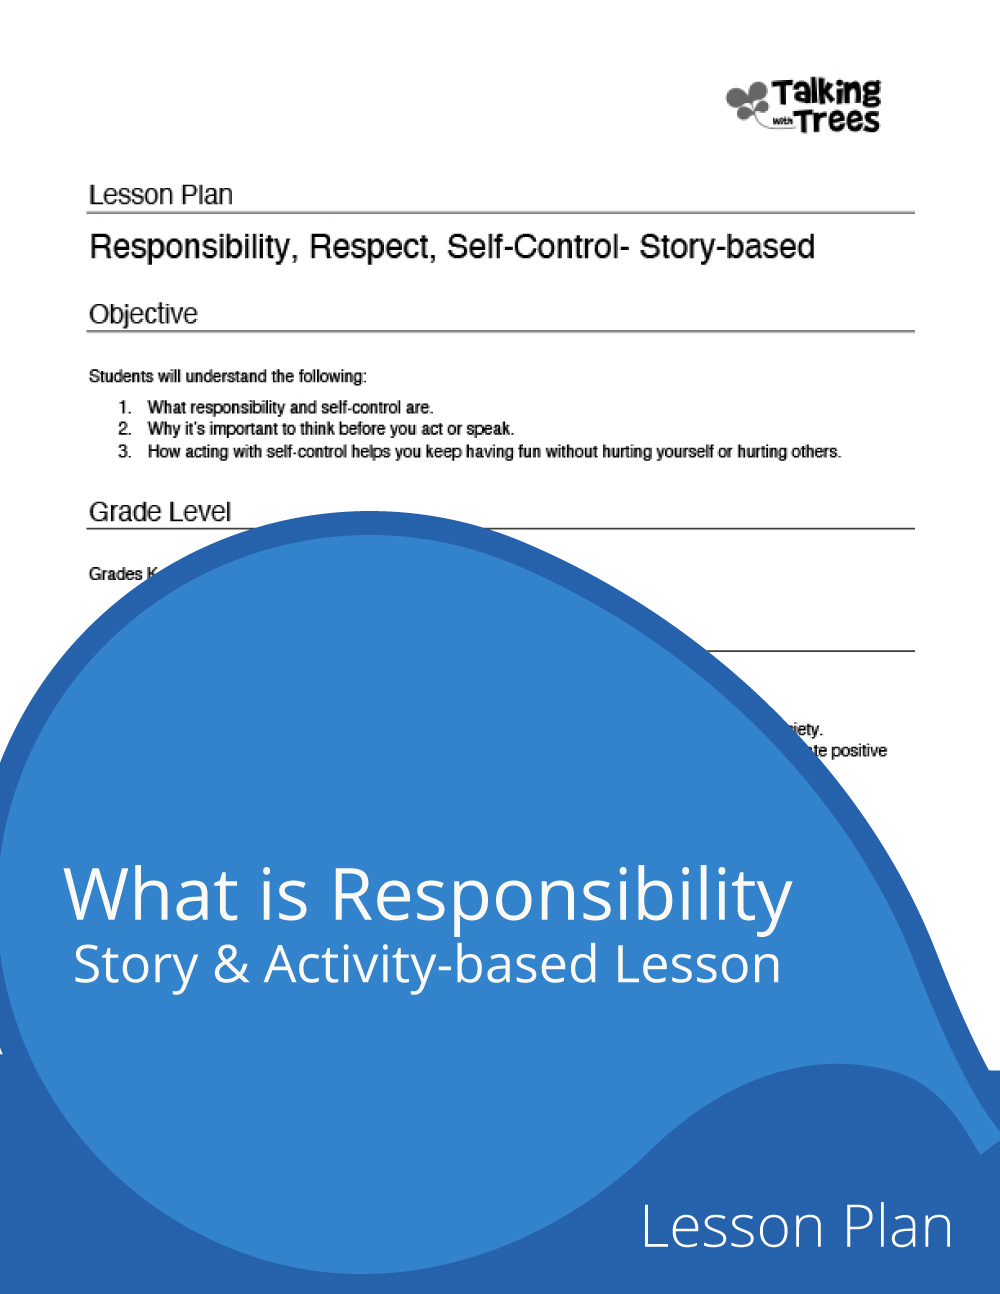 Responsibility & Respect lesson plan for elementary SEL